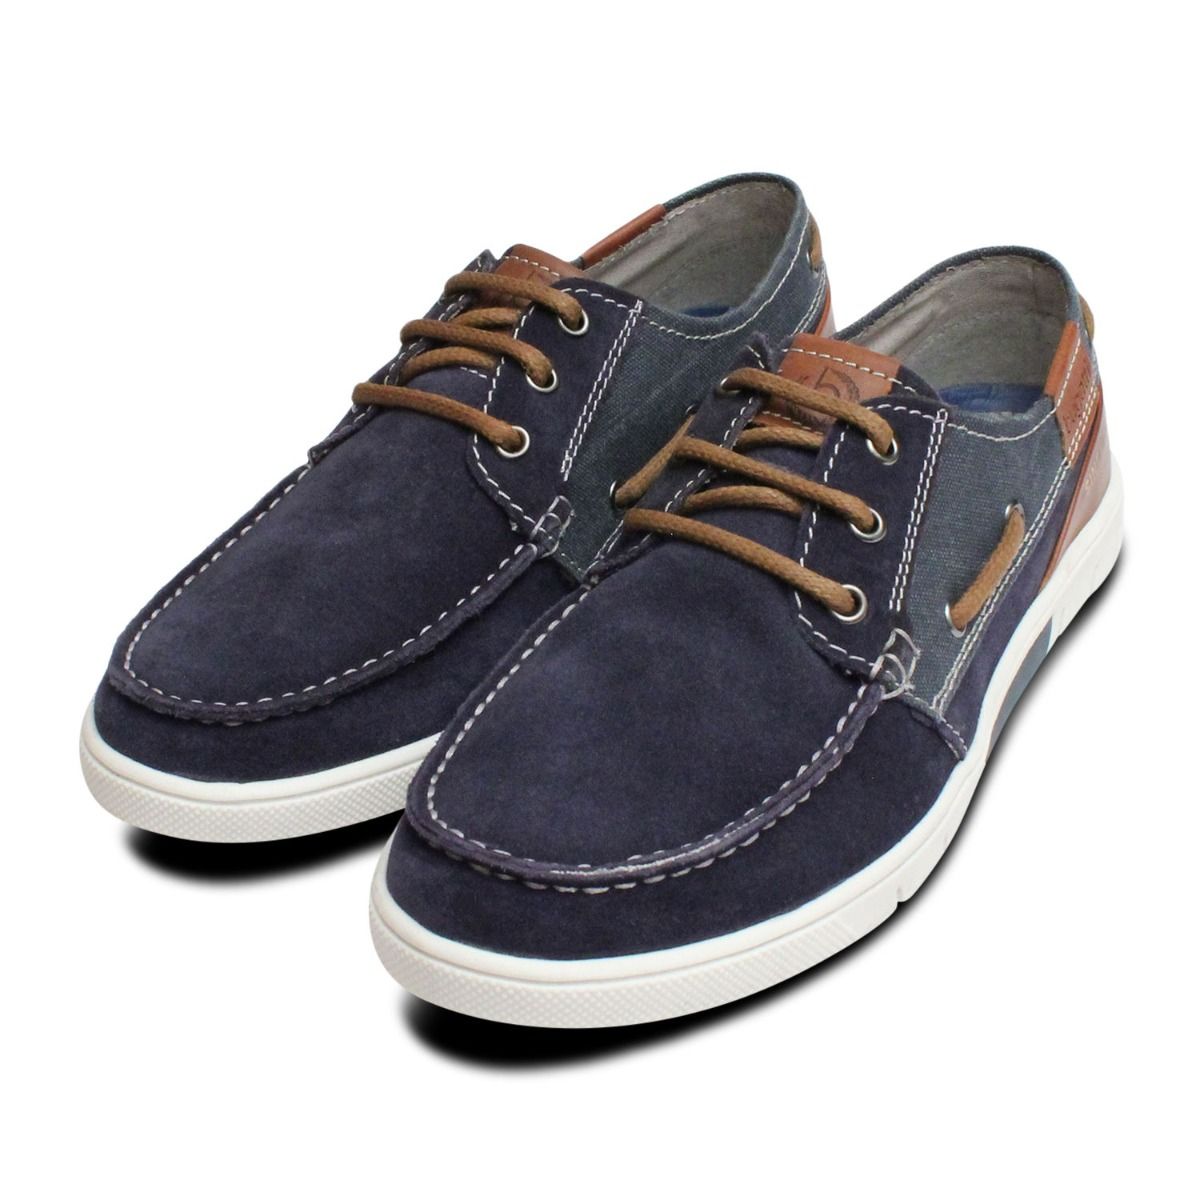 navy blue deck shoes